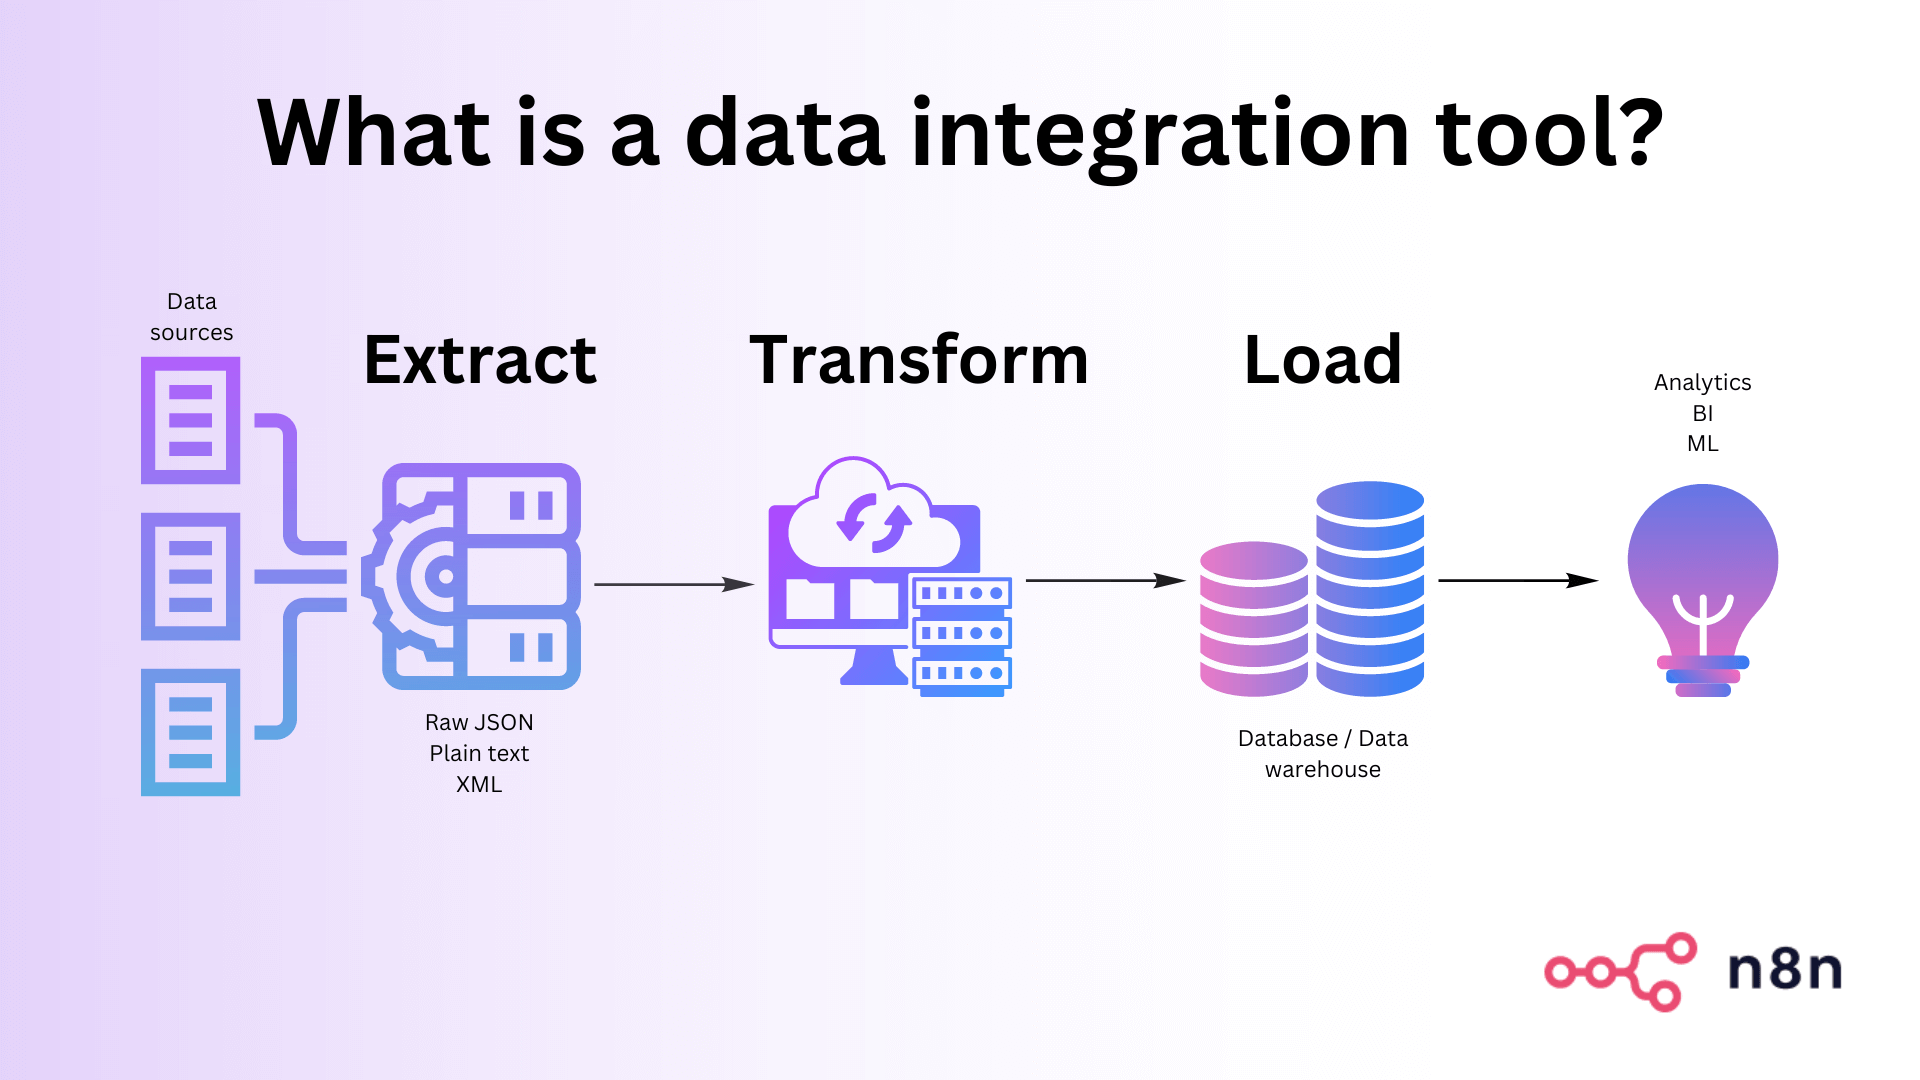 ETL is the cornerstone of the data integration process